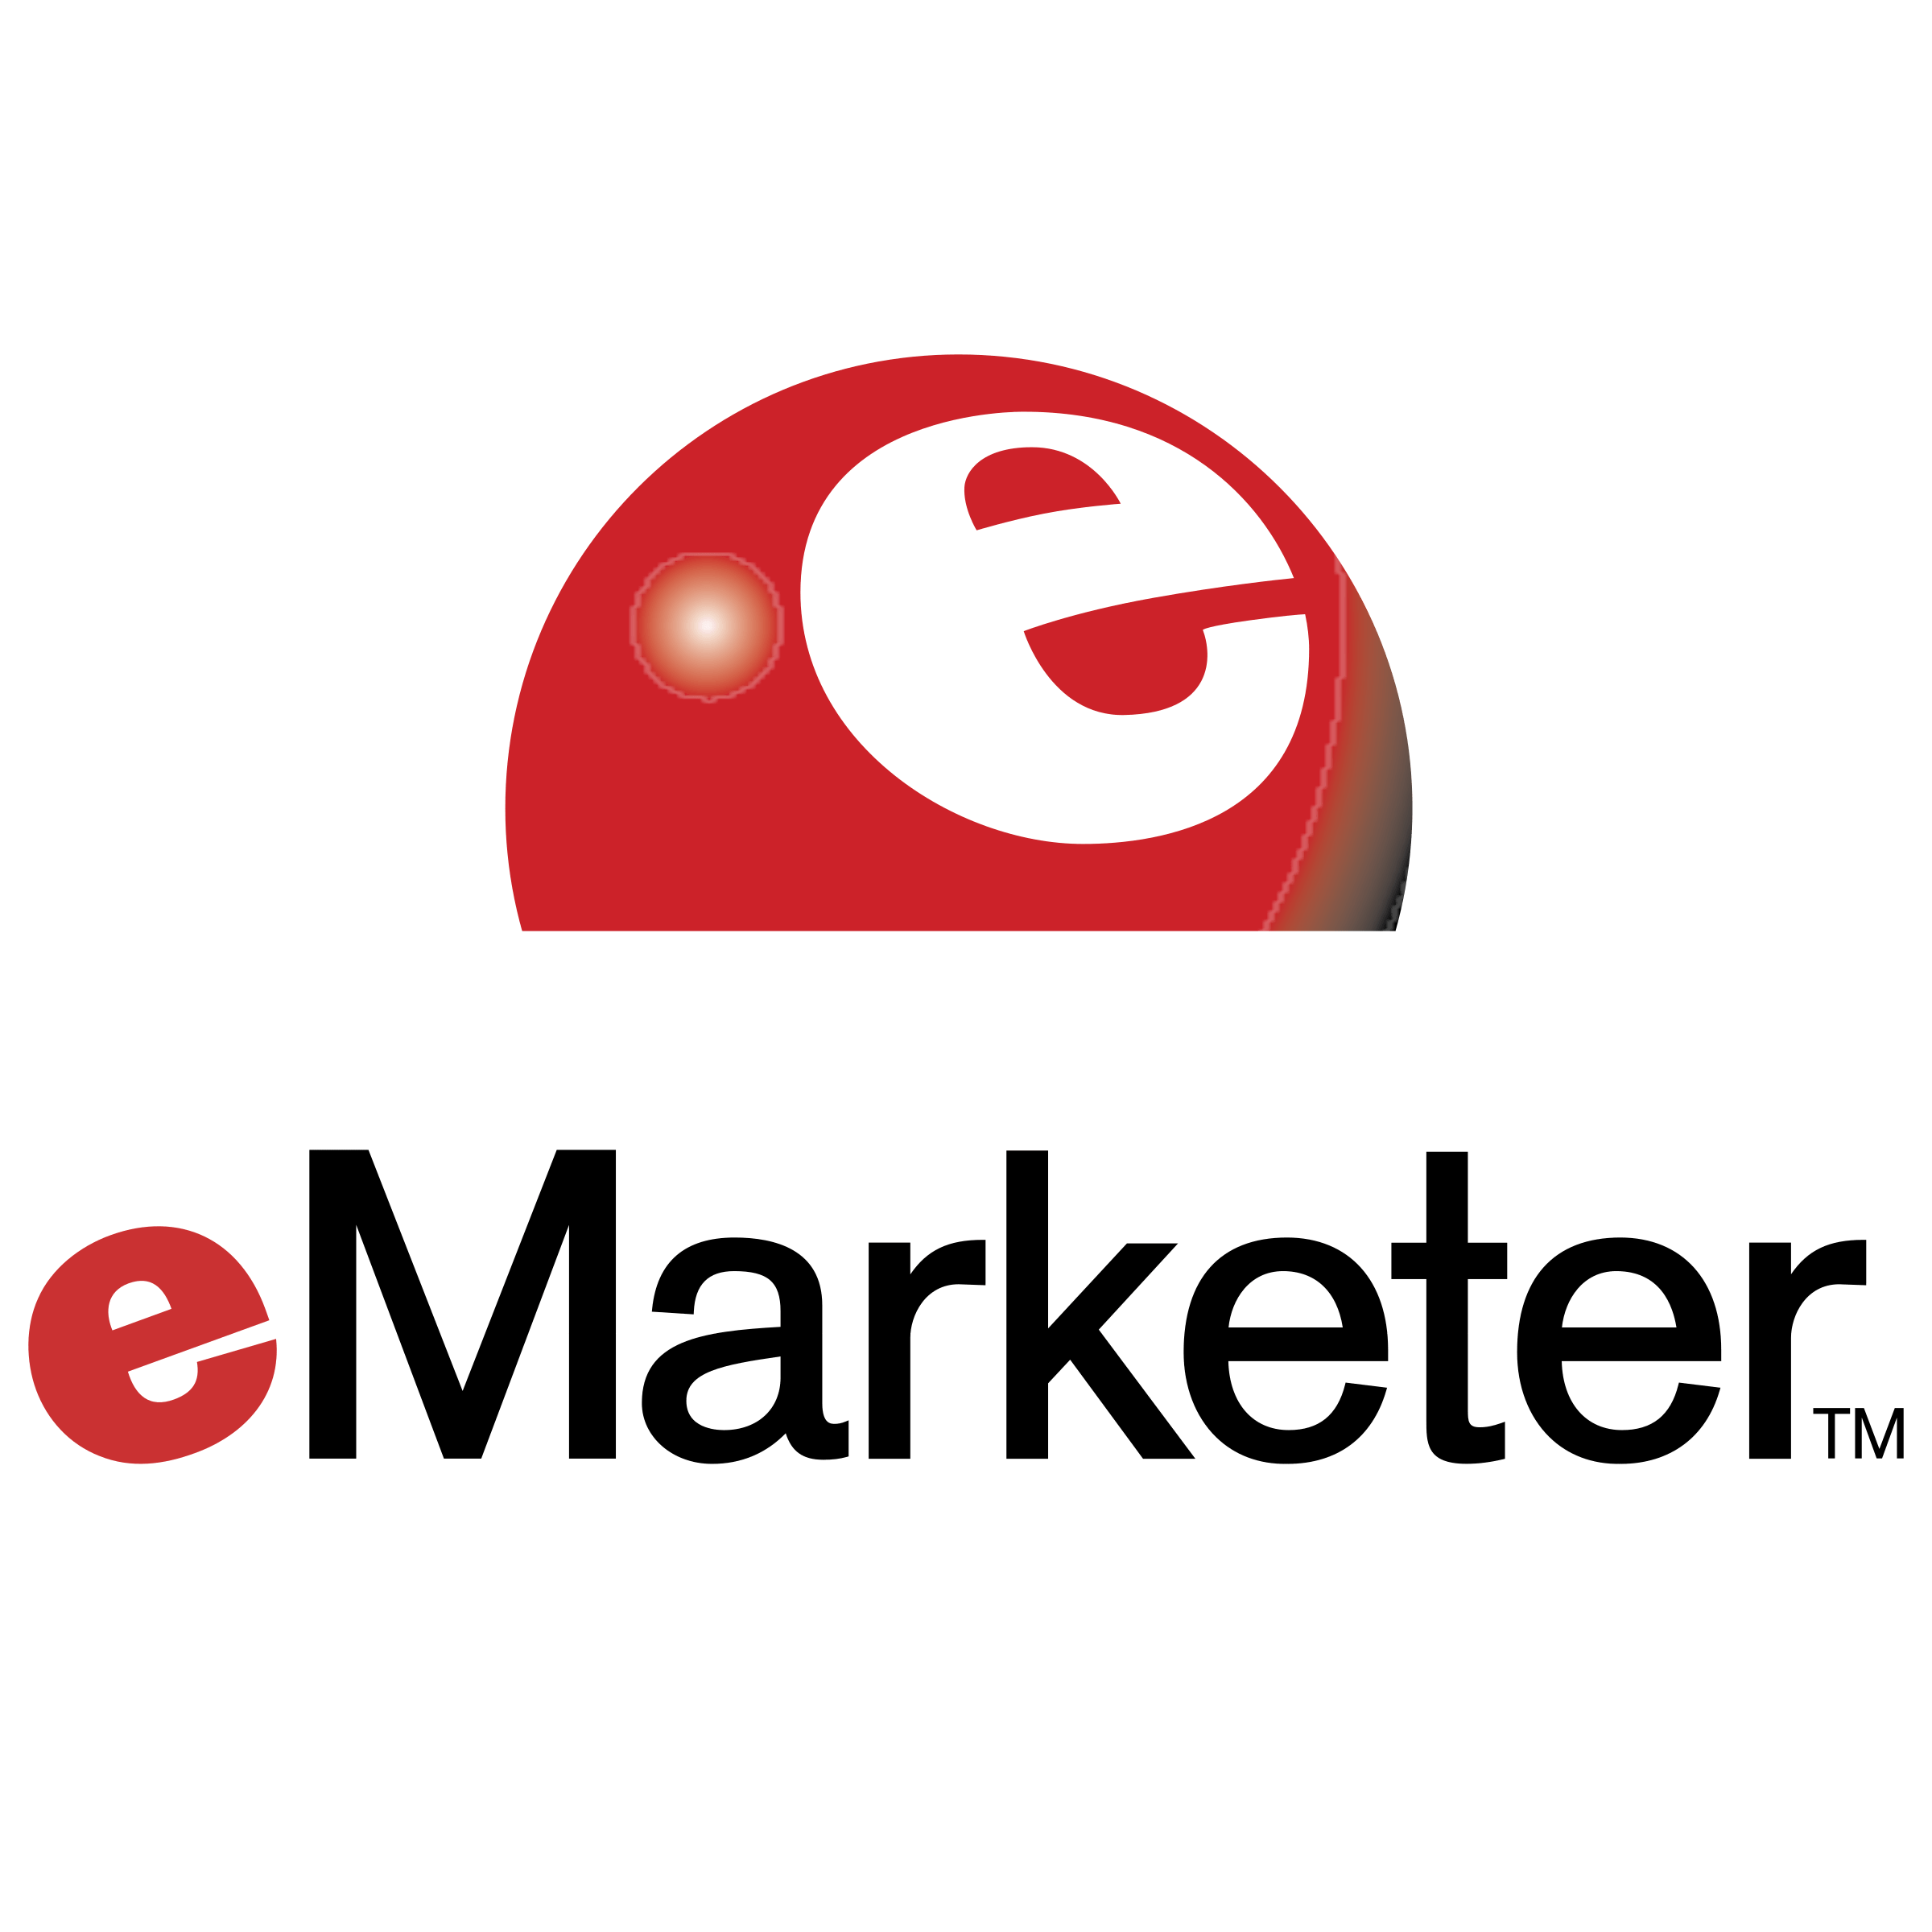 eMarketer Logo - emarketer-logo-png-transparent | Payment Week